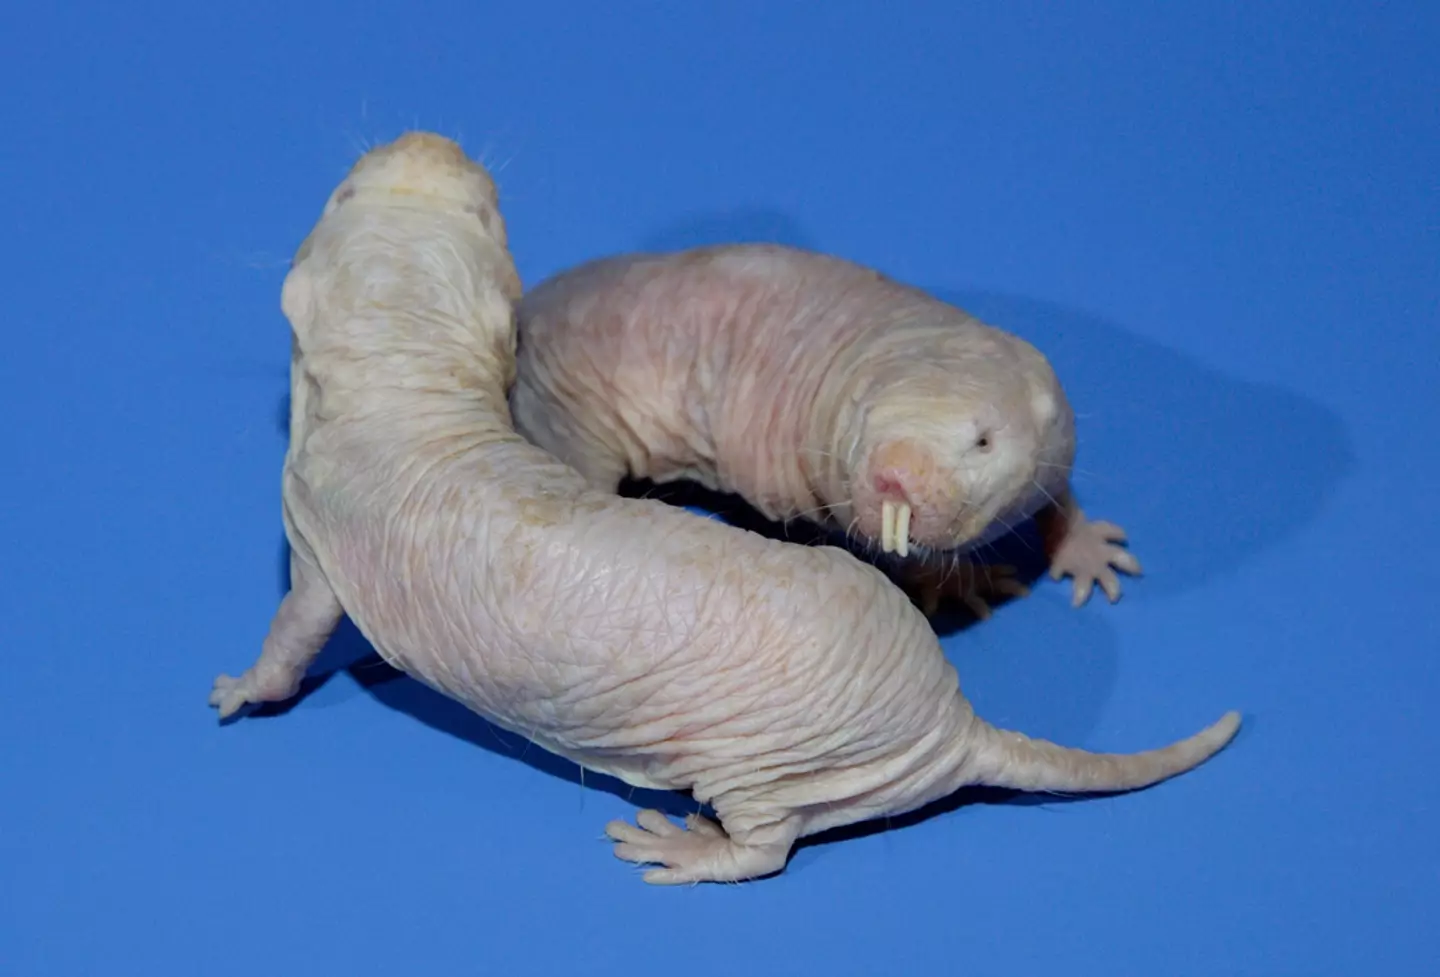 Naked mole rats have a remarkable lifespan.